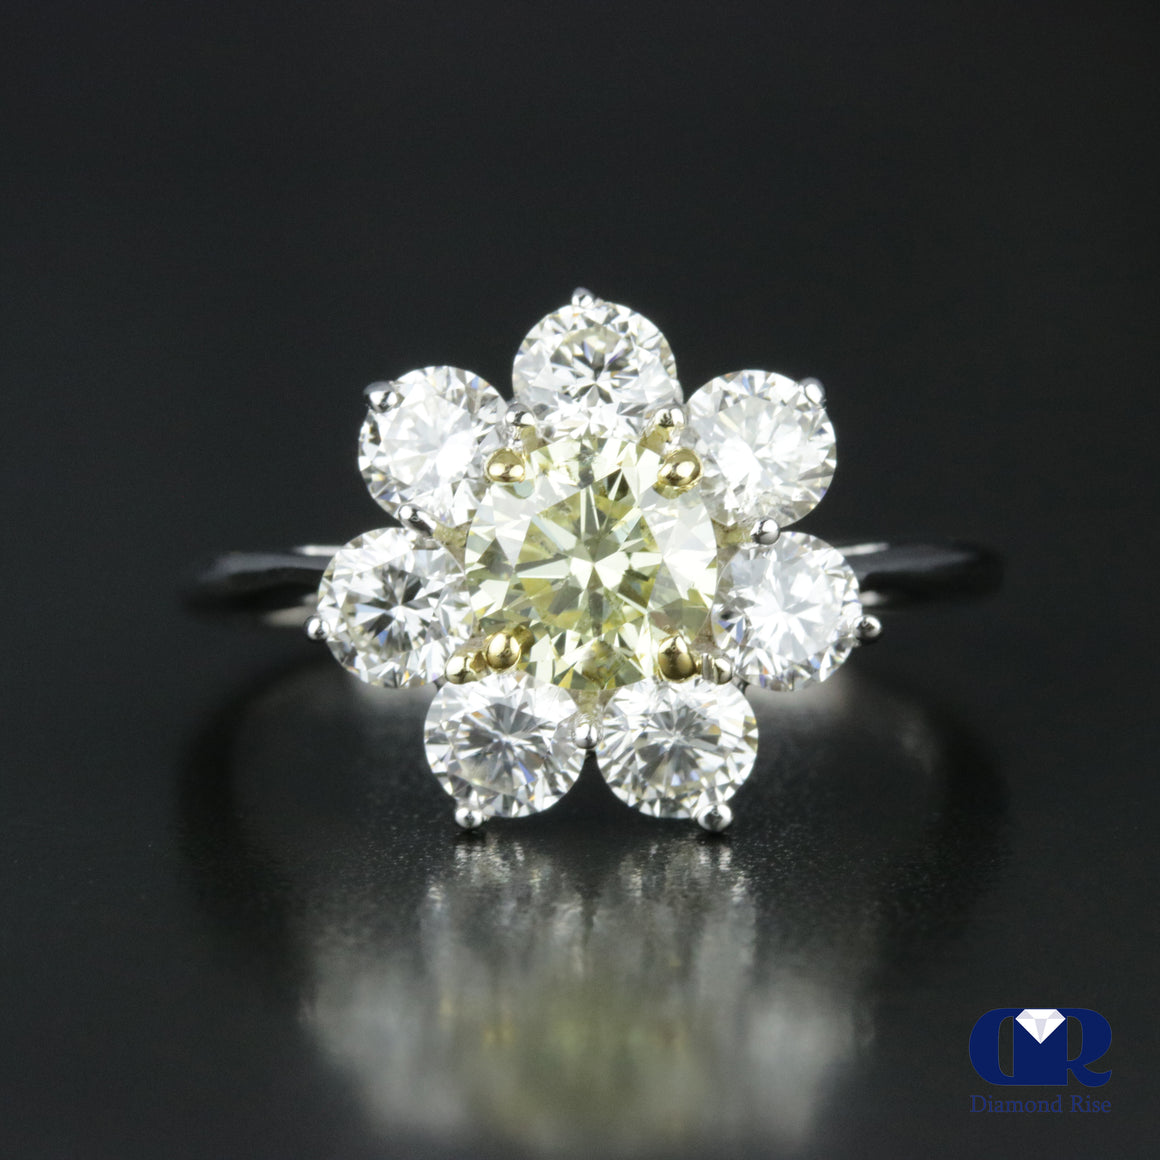 2.12 Carat Round Cut Fancy Yellow Diamond Engagement Ring In 14K White Gold - Diamond Rise Jewelry